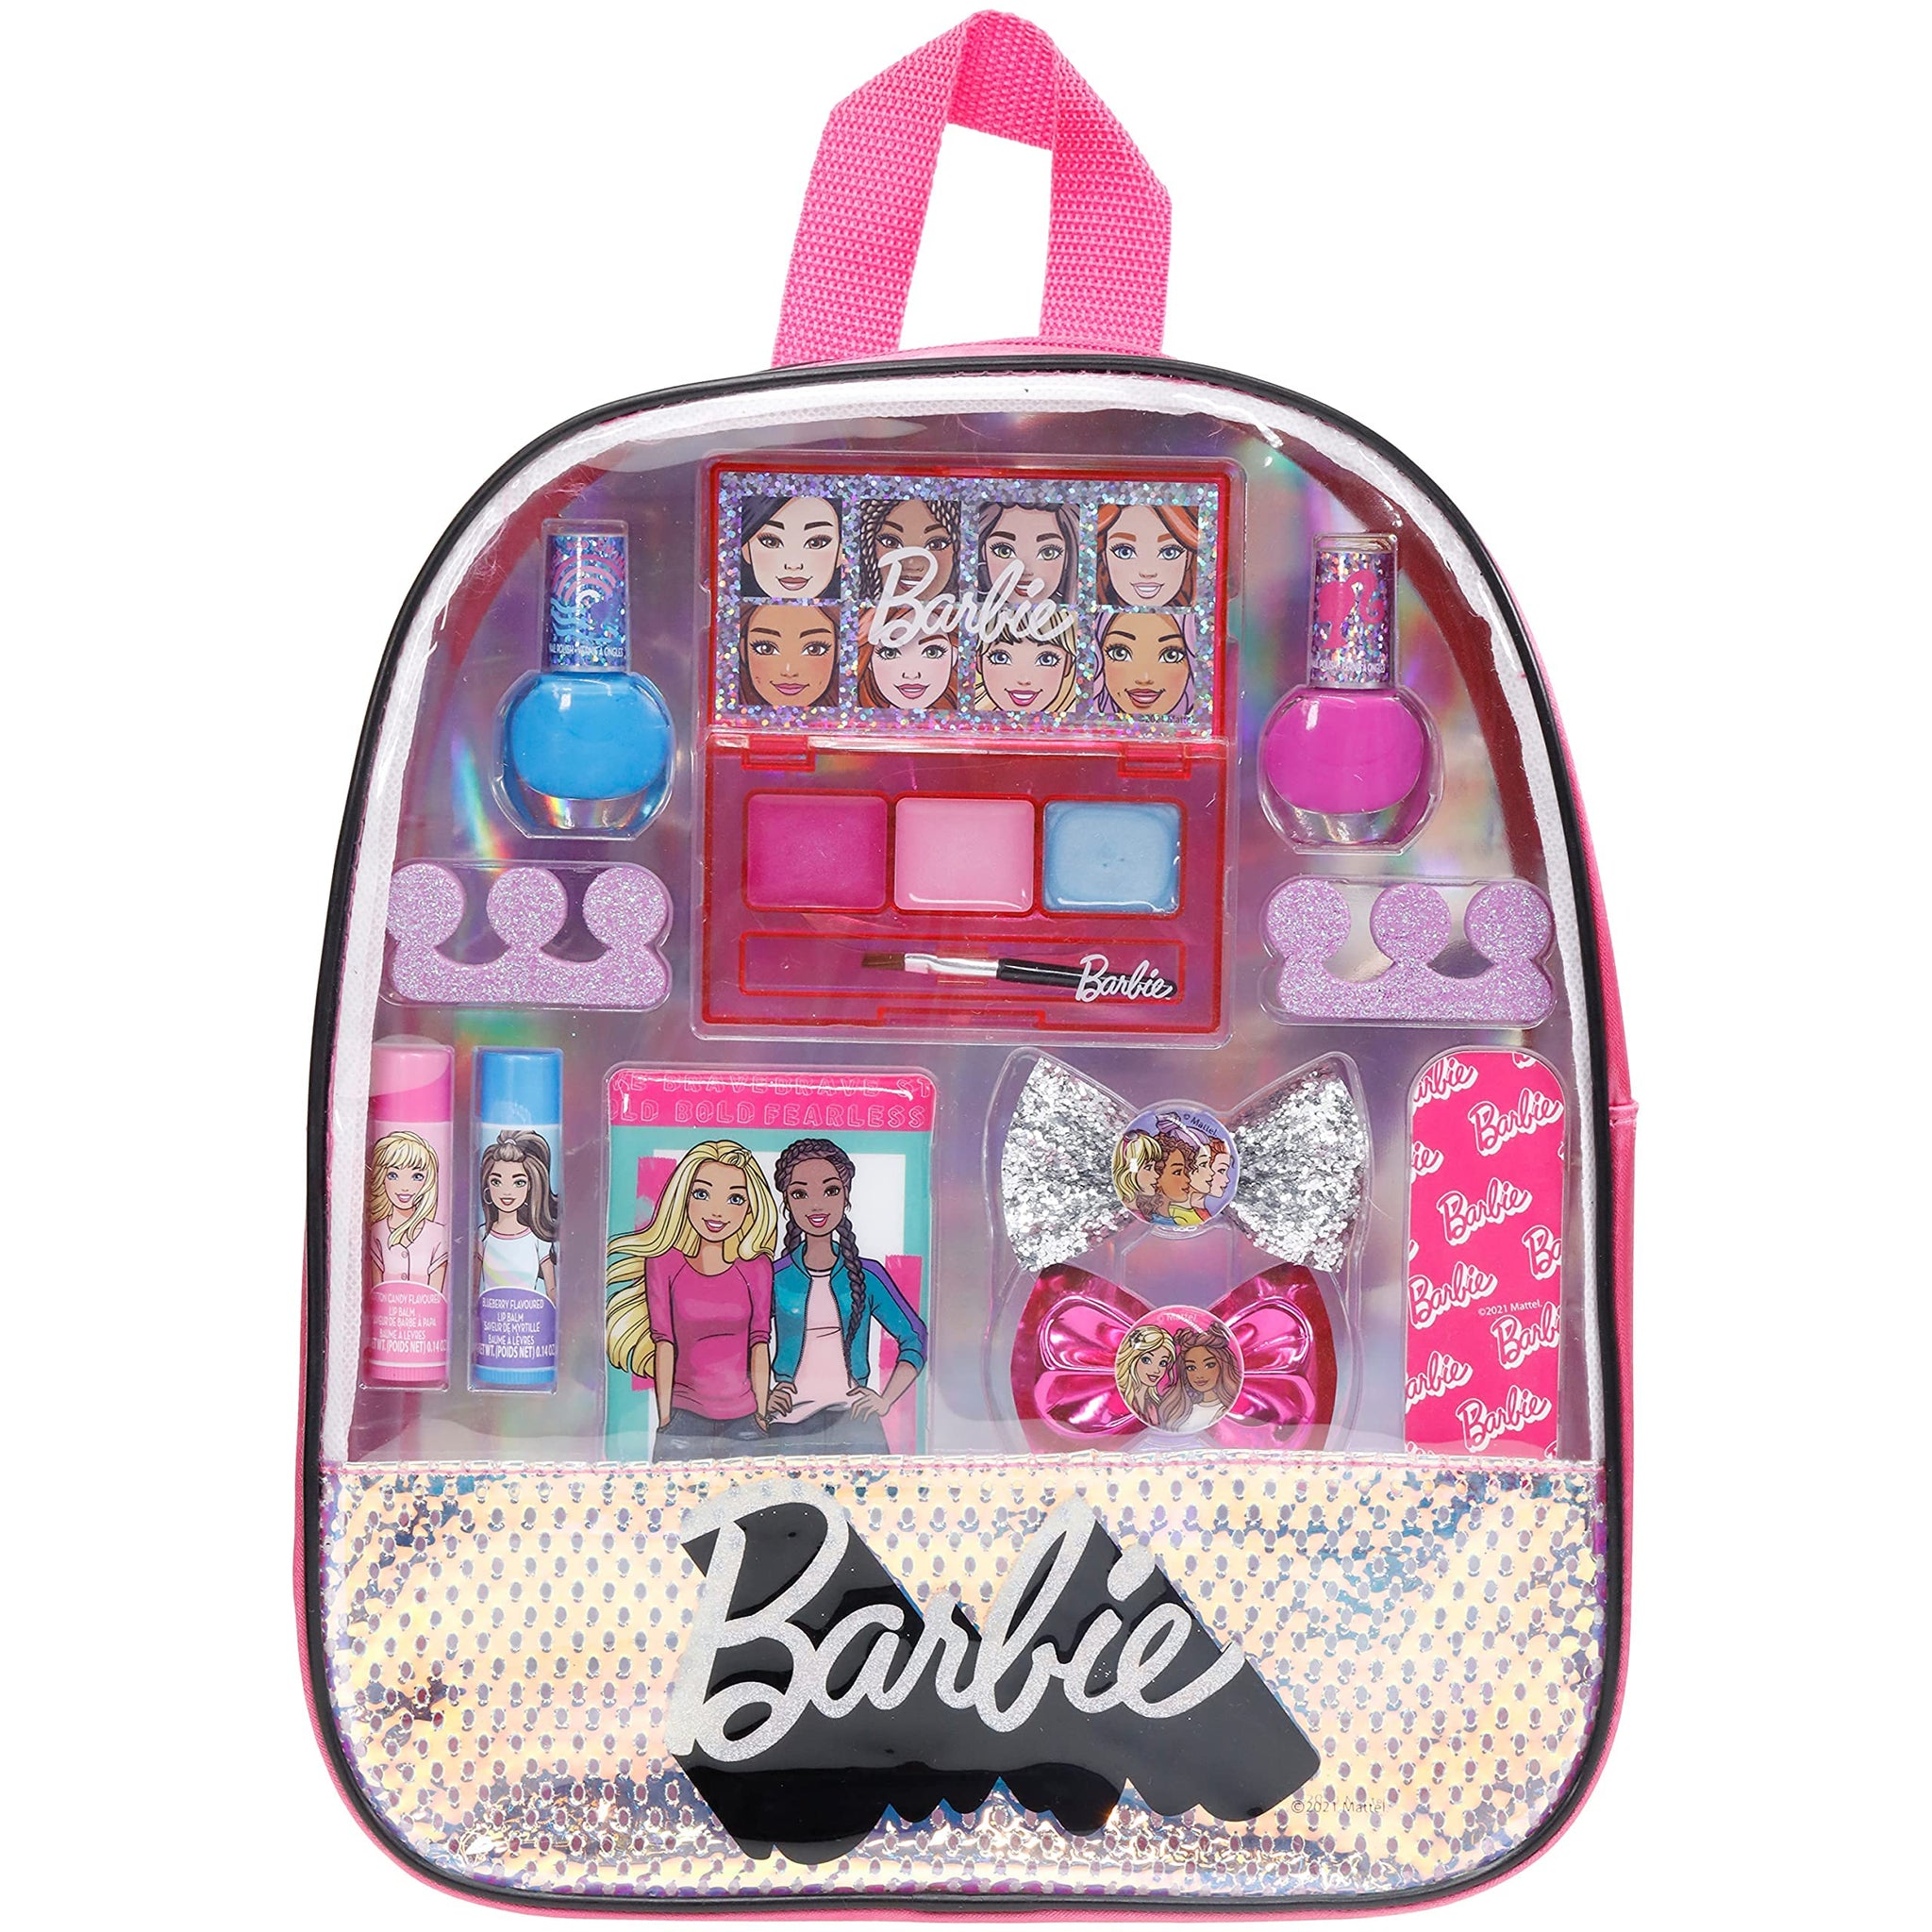 Y2K Barbie Girl Organziers Tara Toys Barbie Accessory Case Barbie Purse